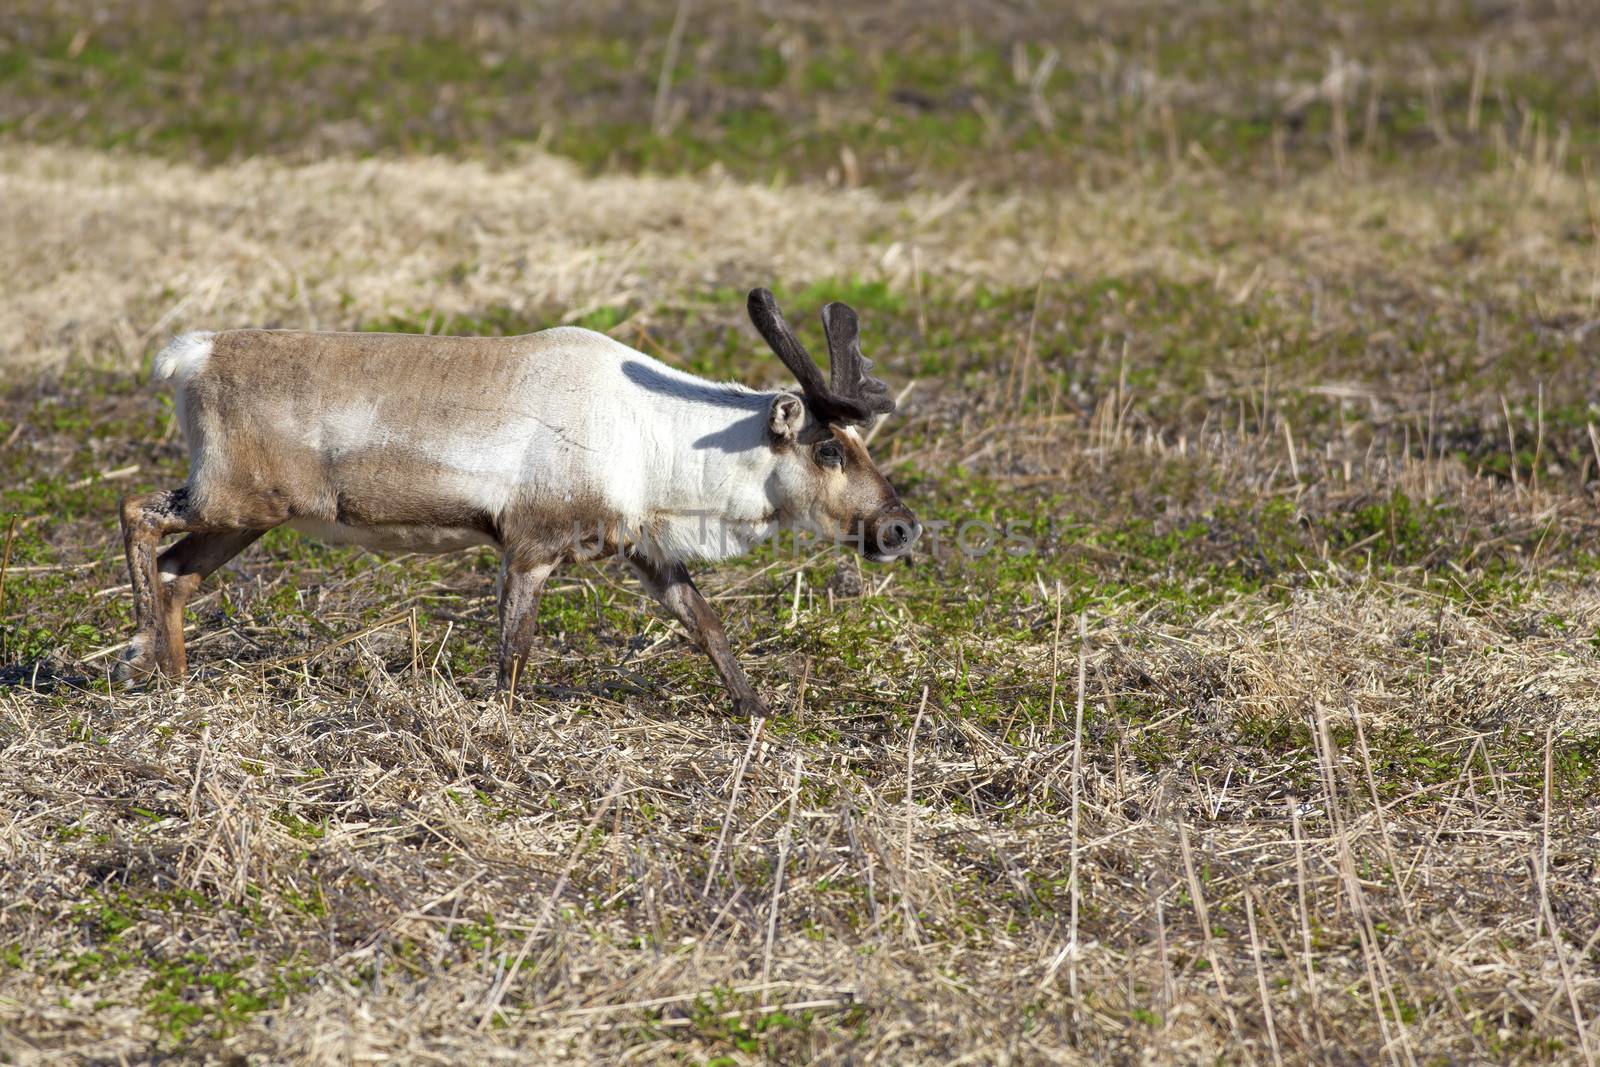 A Reindeer grassing on a meadow in Norway